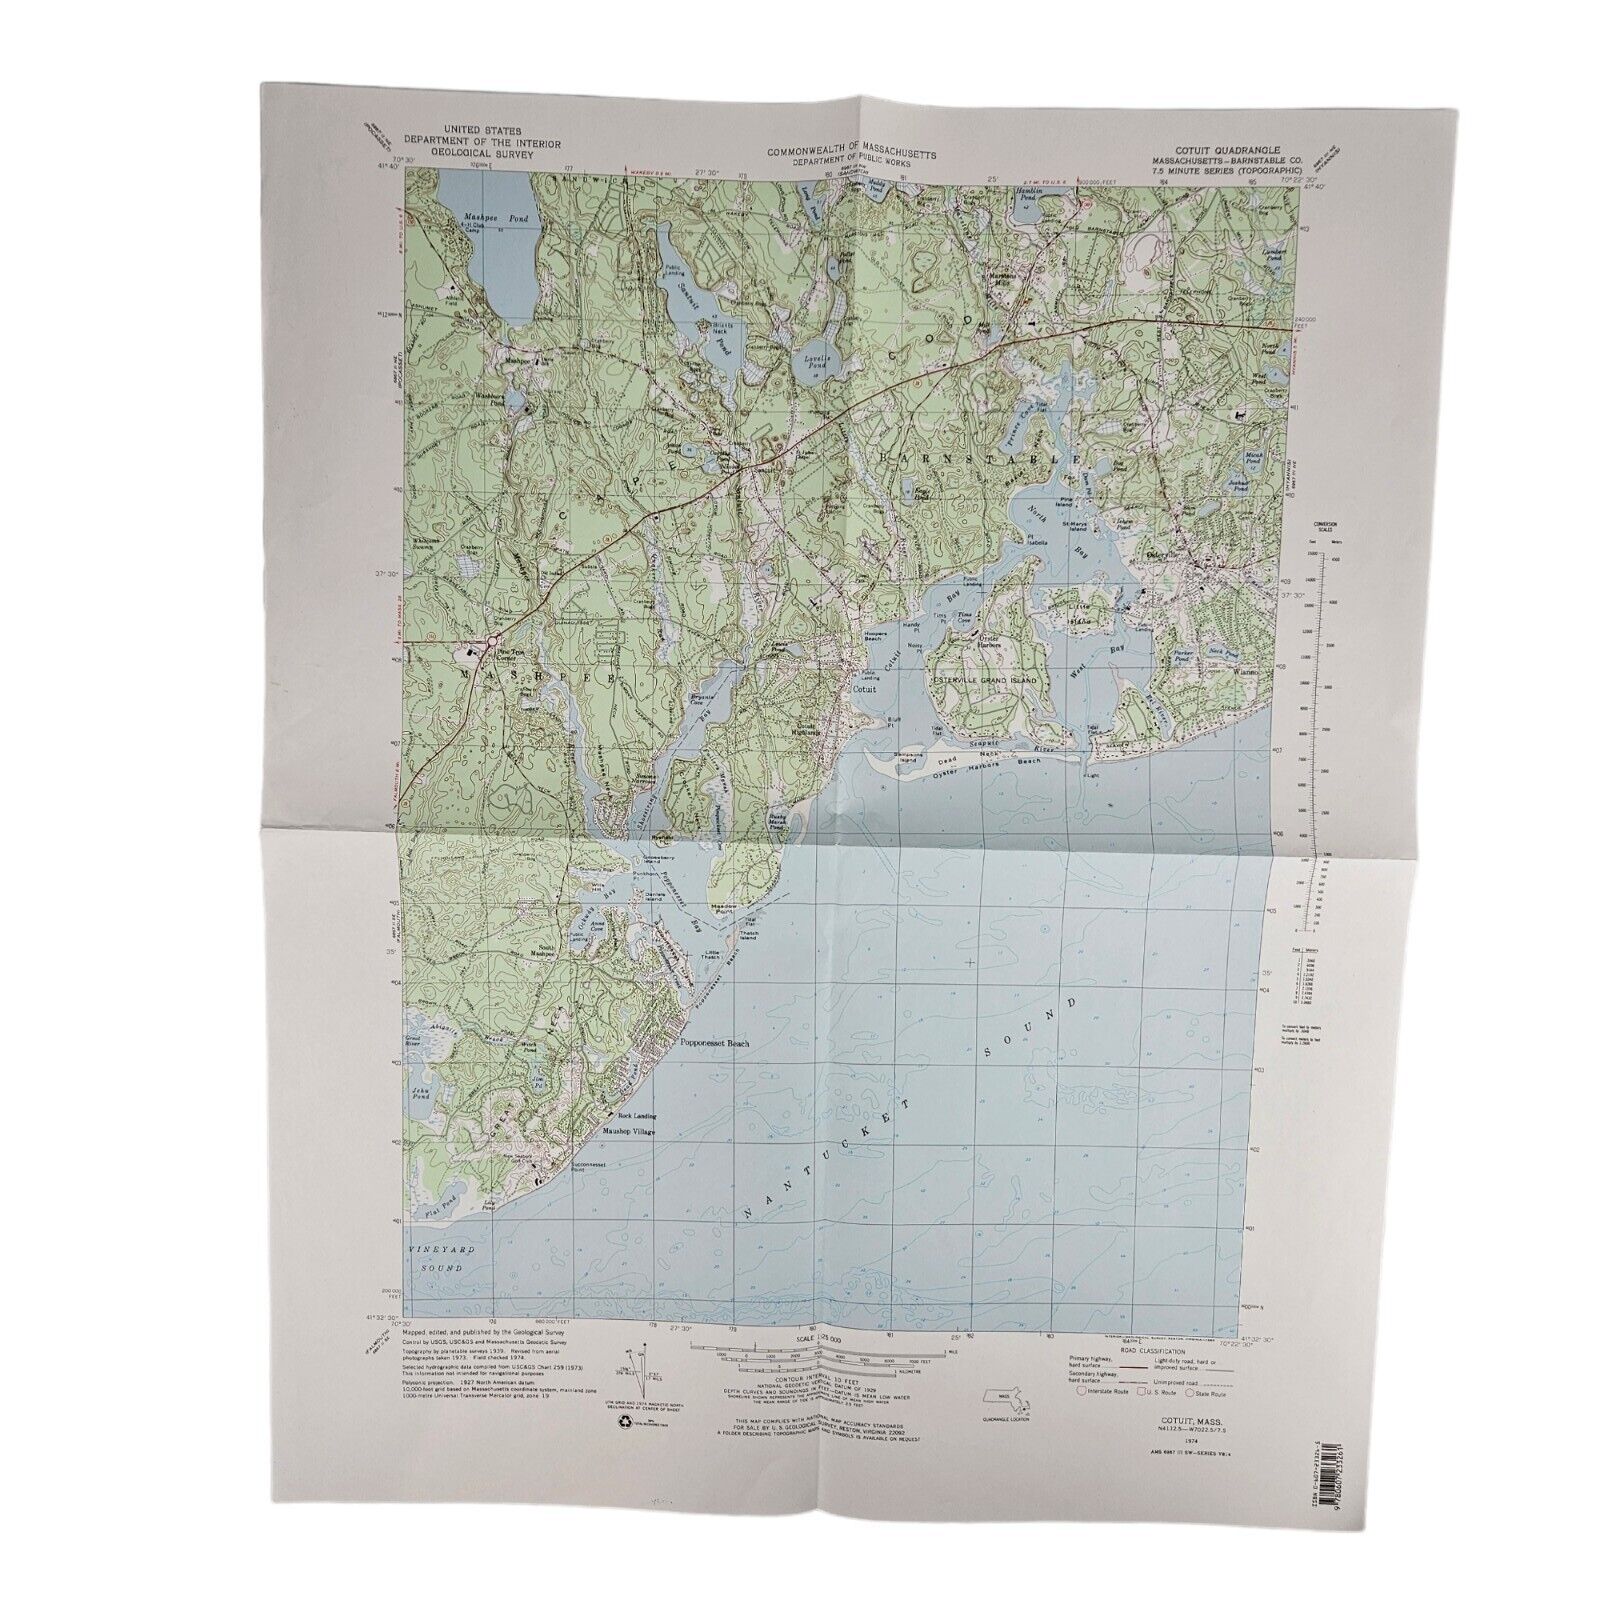 Cotuit Quadrangle Massachusetts Topographic Geological Survey Map Vtg. 1974